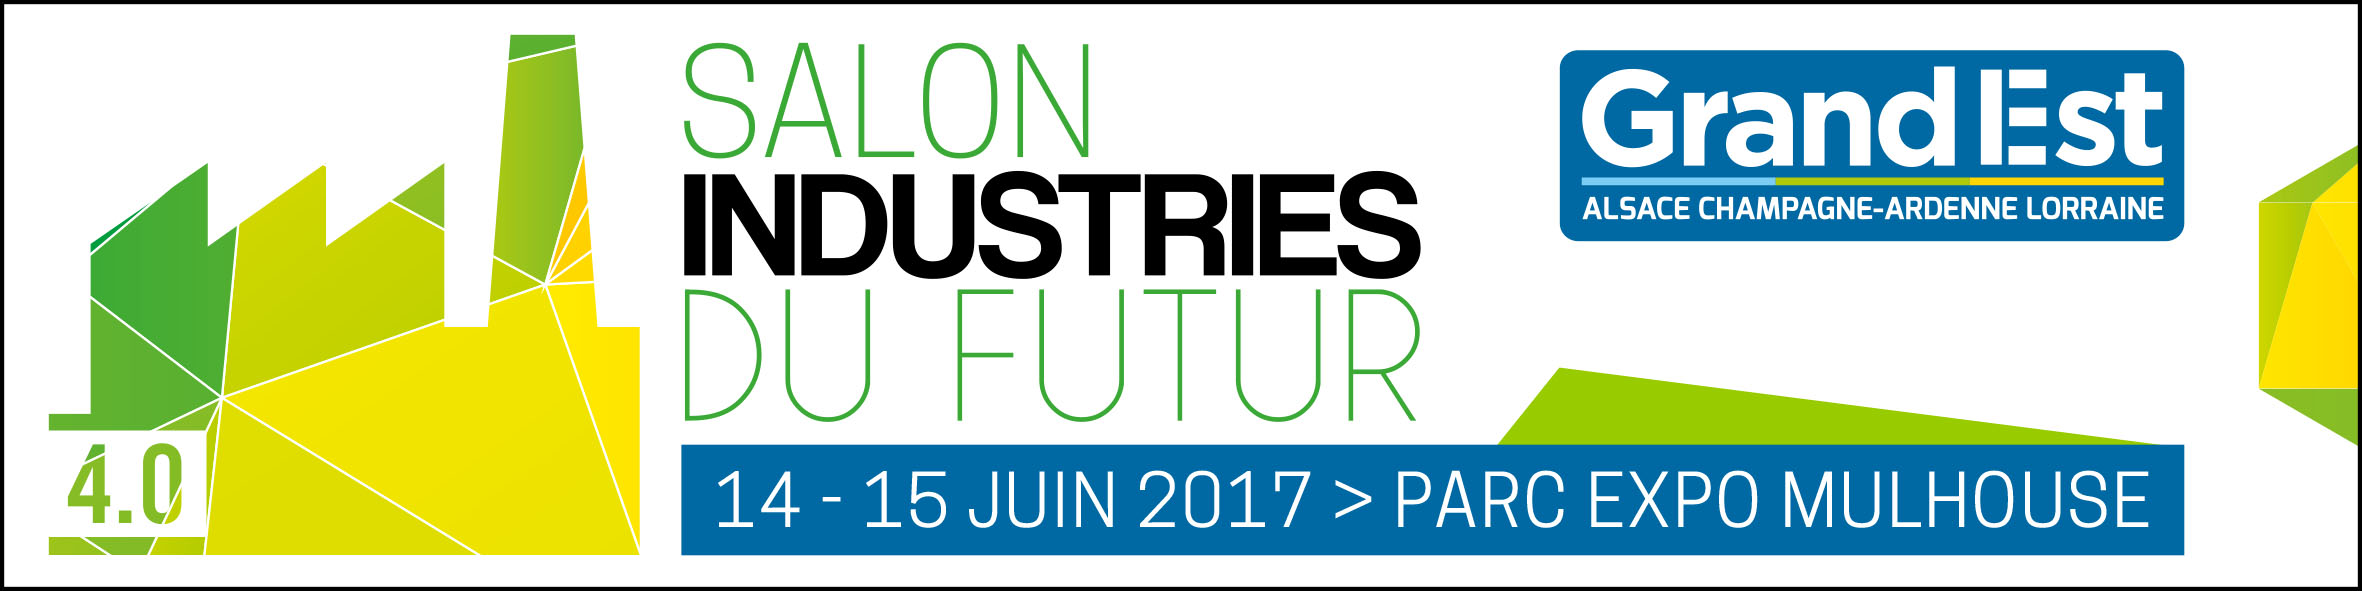 Salon-Industries-Futur-2017